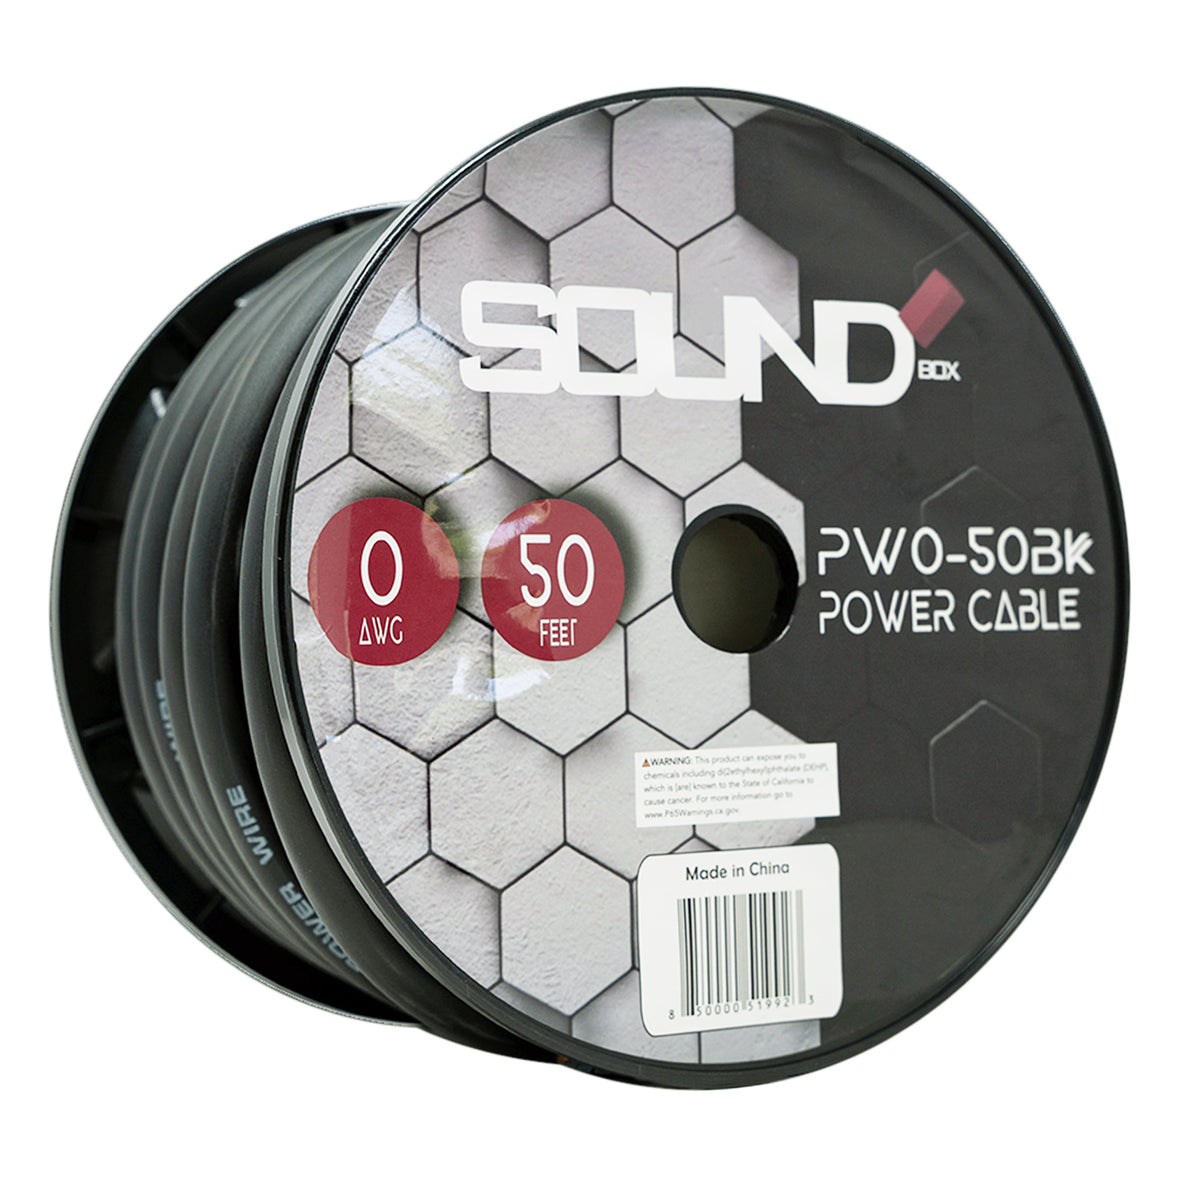 SoundBox PW0-50BK, 1/0 Gauge OFC Copper Amplifier Power / Ground Wire - 50 Ft. Spool - Black